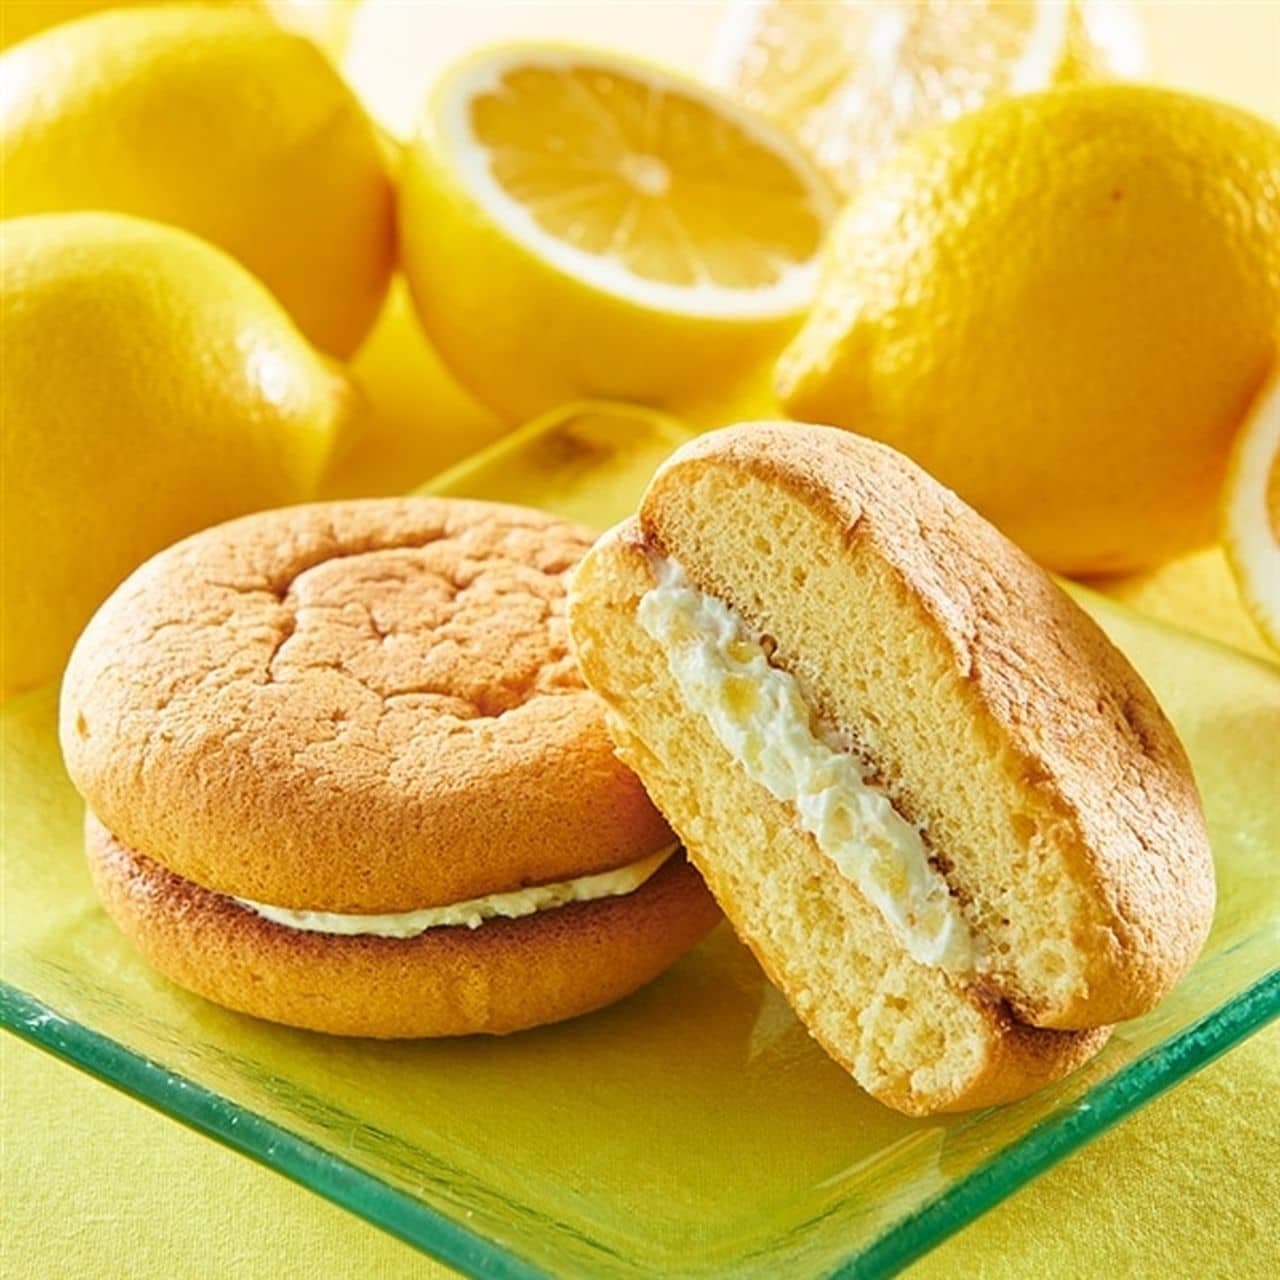 Chateraise "Setouchi Lemon Bousset